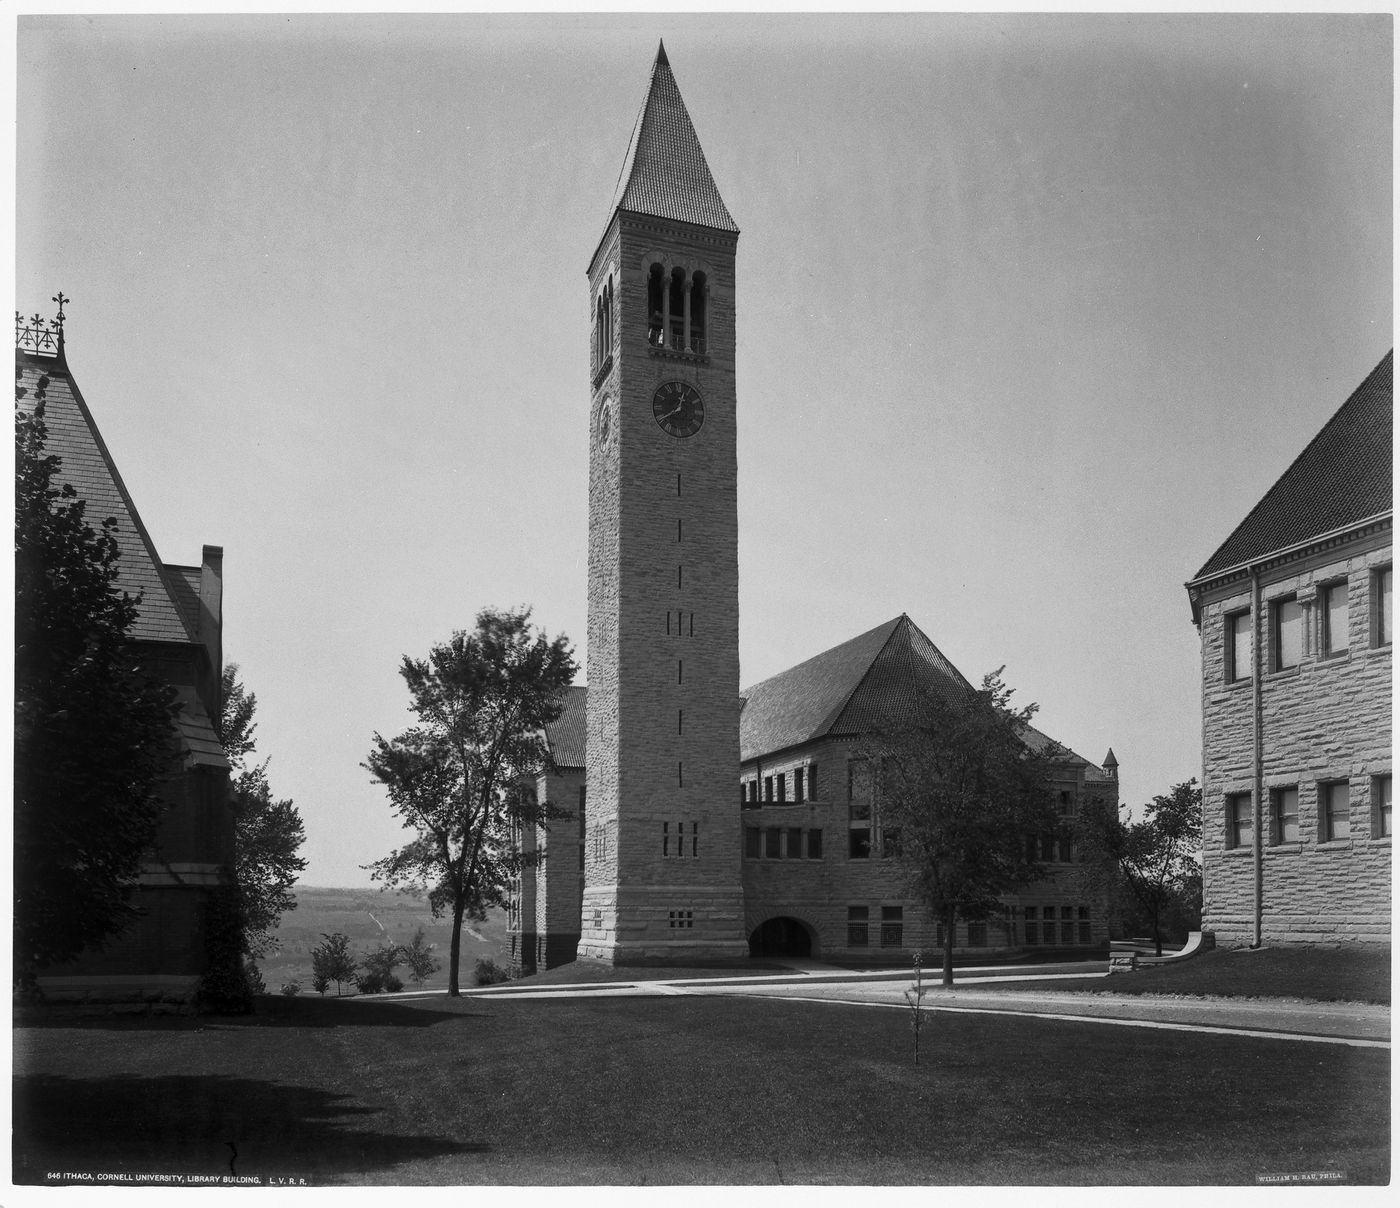 646 Ithaca, Cornell University, Library Building L.V.R.R.